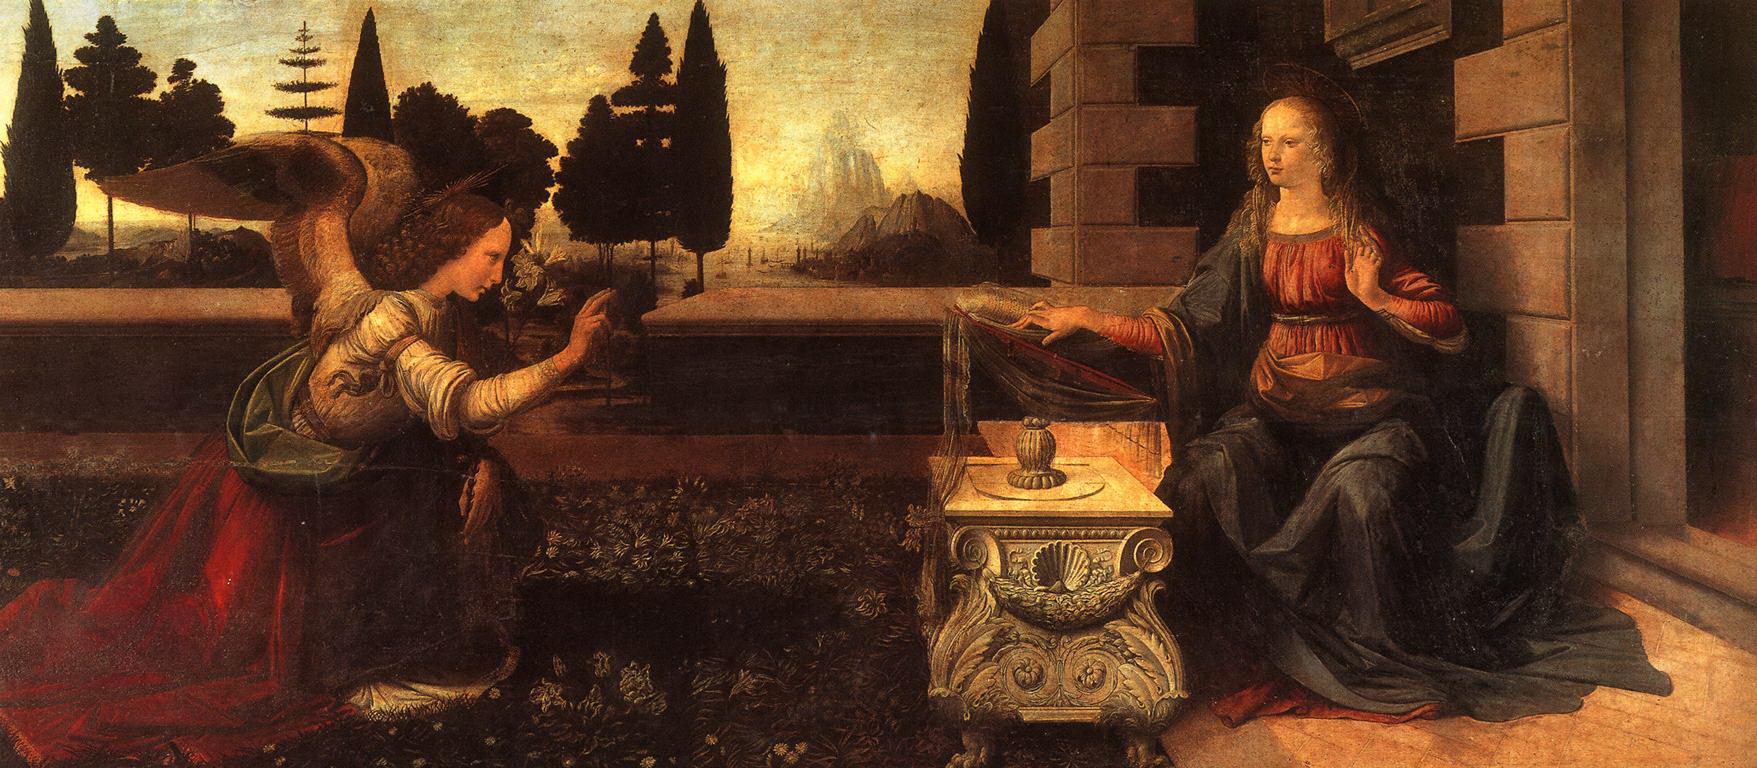 Painting of leonardo da vinci - Leonardo Da Vinci Facts For Kids